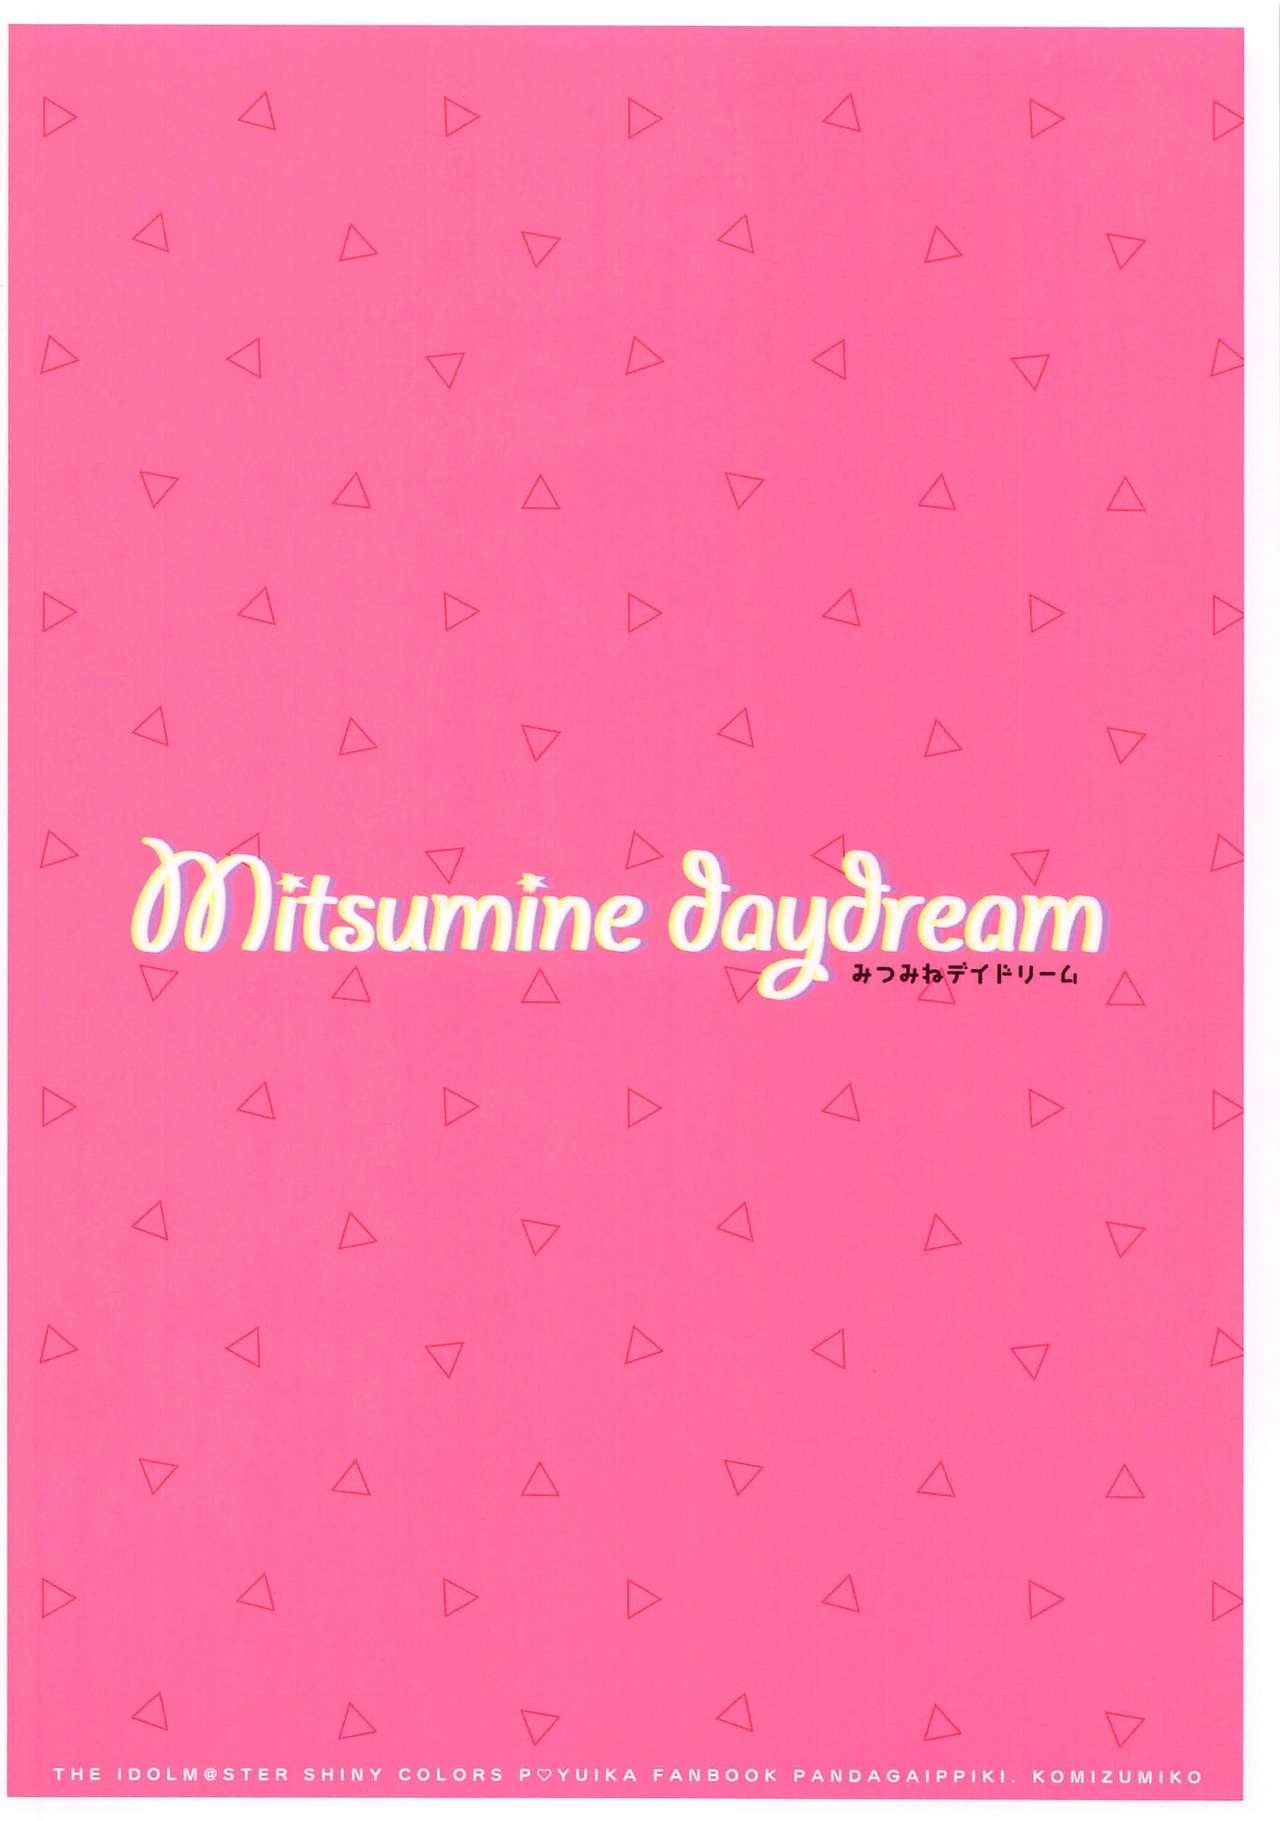 Mitsumine daydream (Ero Projects) - 15